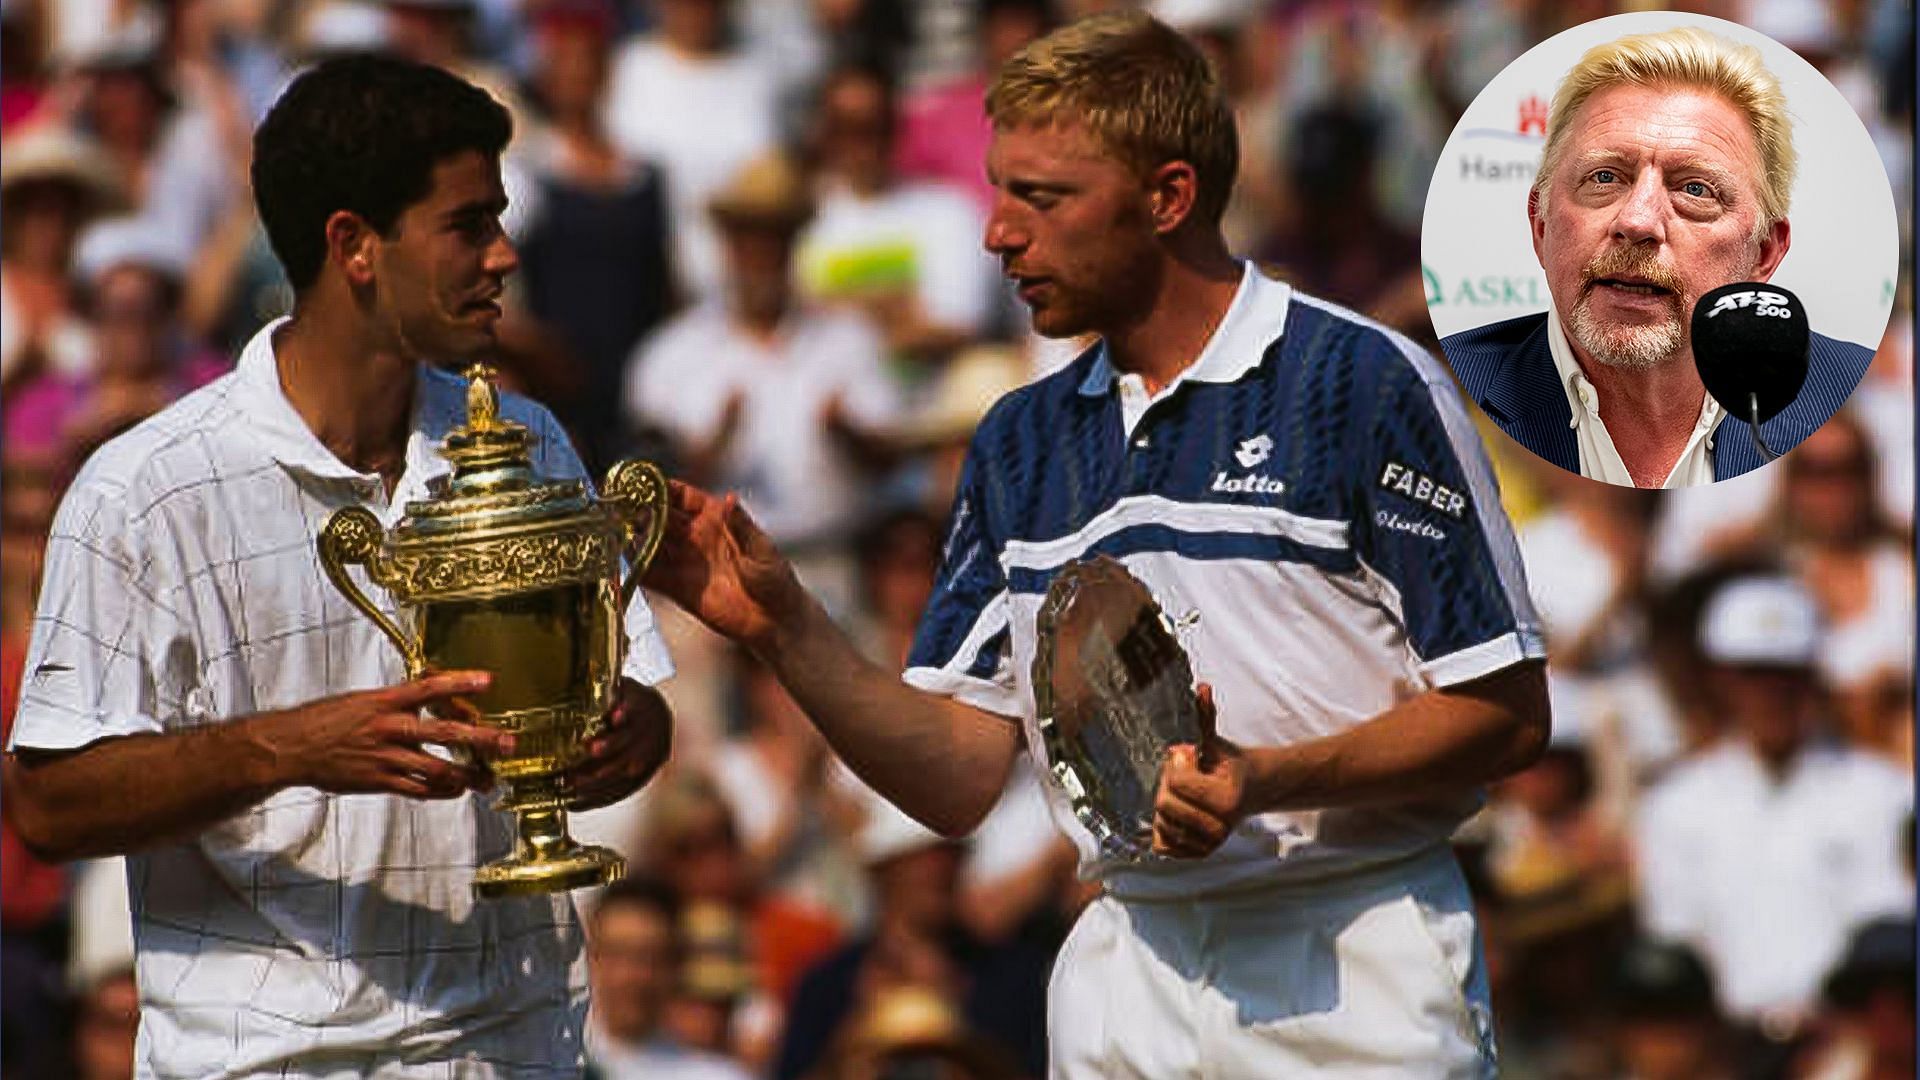 Boris Becker and Pete Sampras pictured